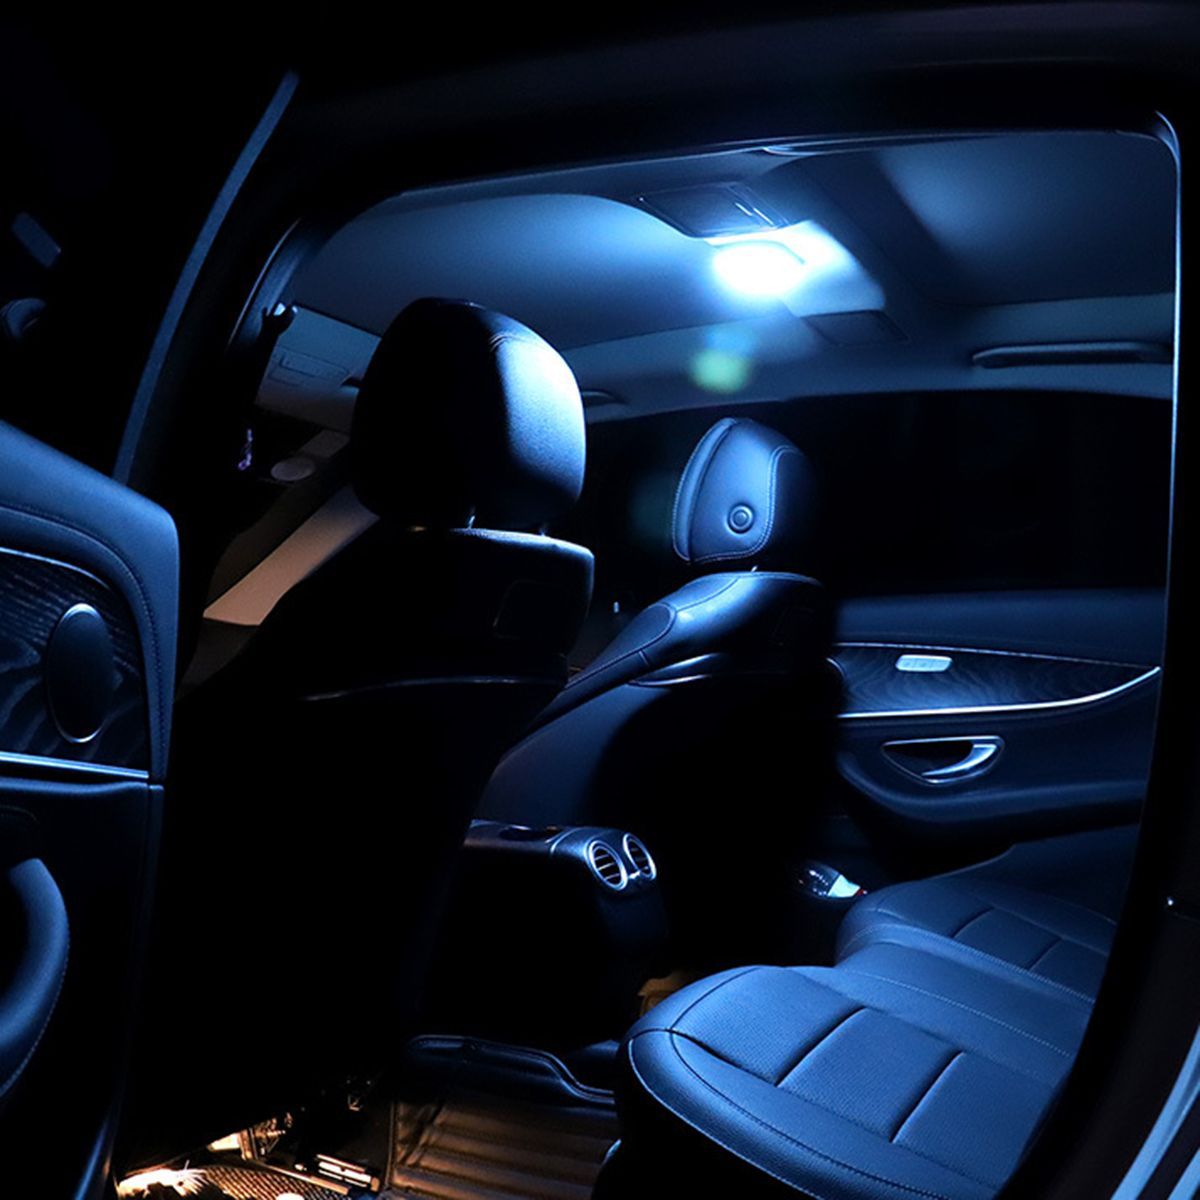 Car-Roof--Interior-LED-Reading-Light-Magnet-Ceiling-Lamp-USB-Convertible--Light-1675234